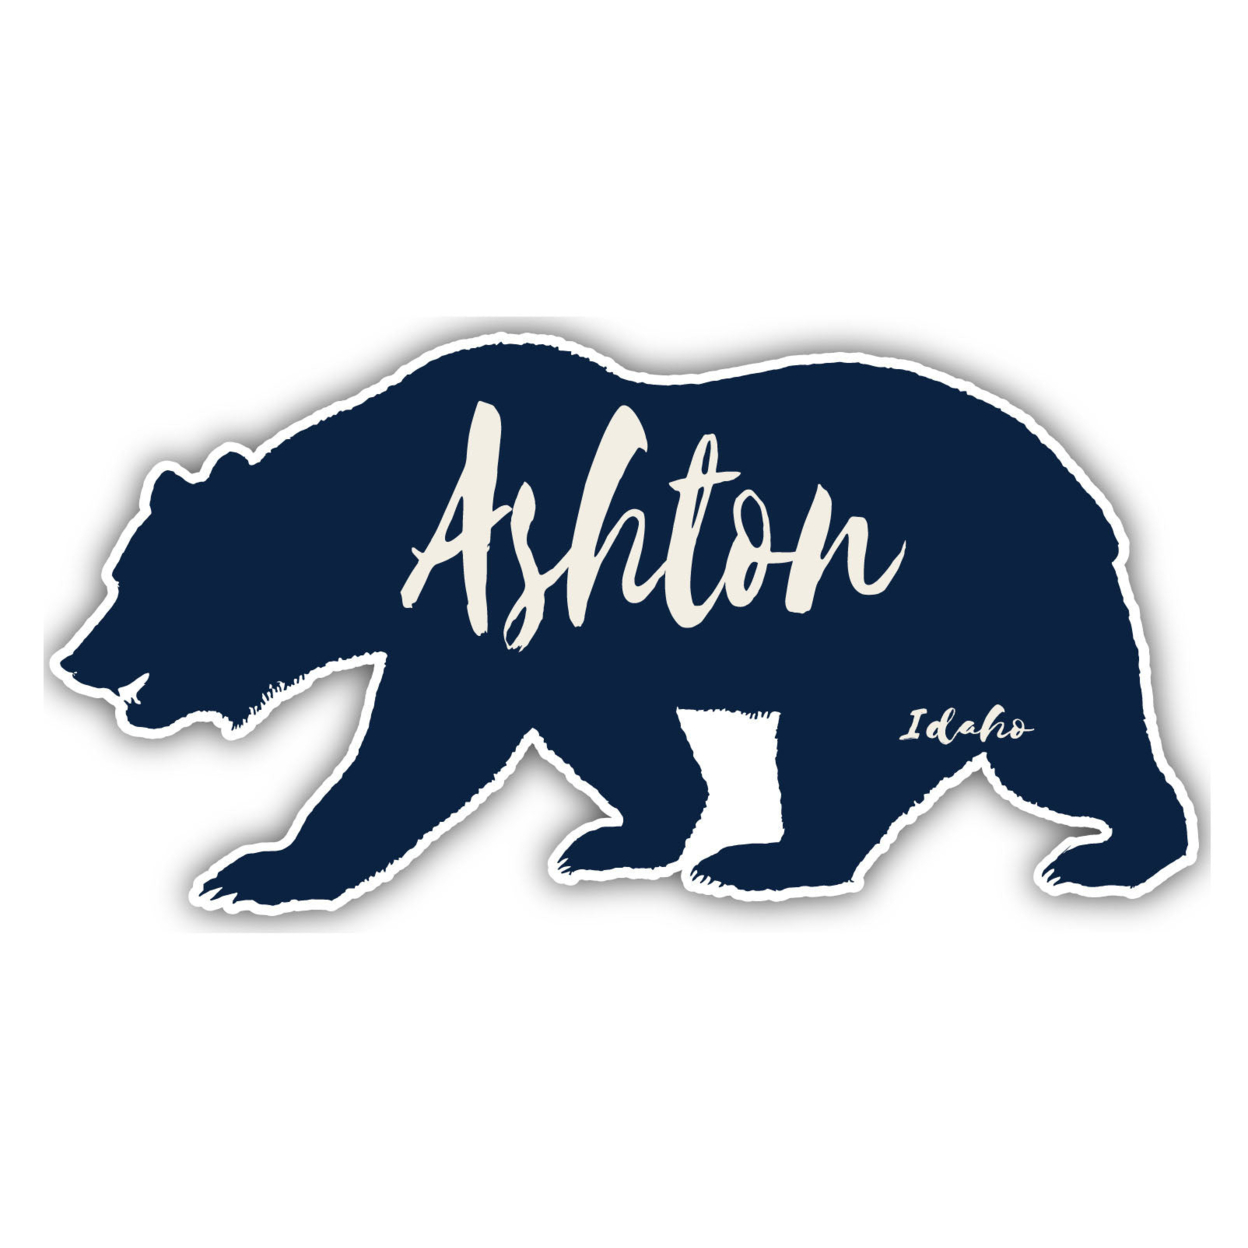 Ashton Idaho Souvenir Decorative Stickers (Choose Theme And Size) - Single Unit, 8-Inch, Adventures Awaits